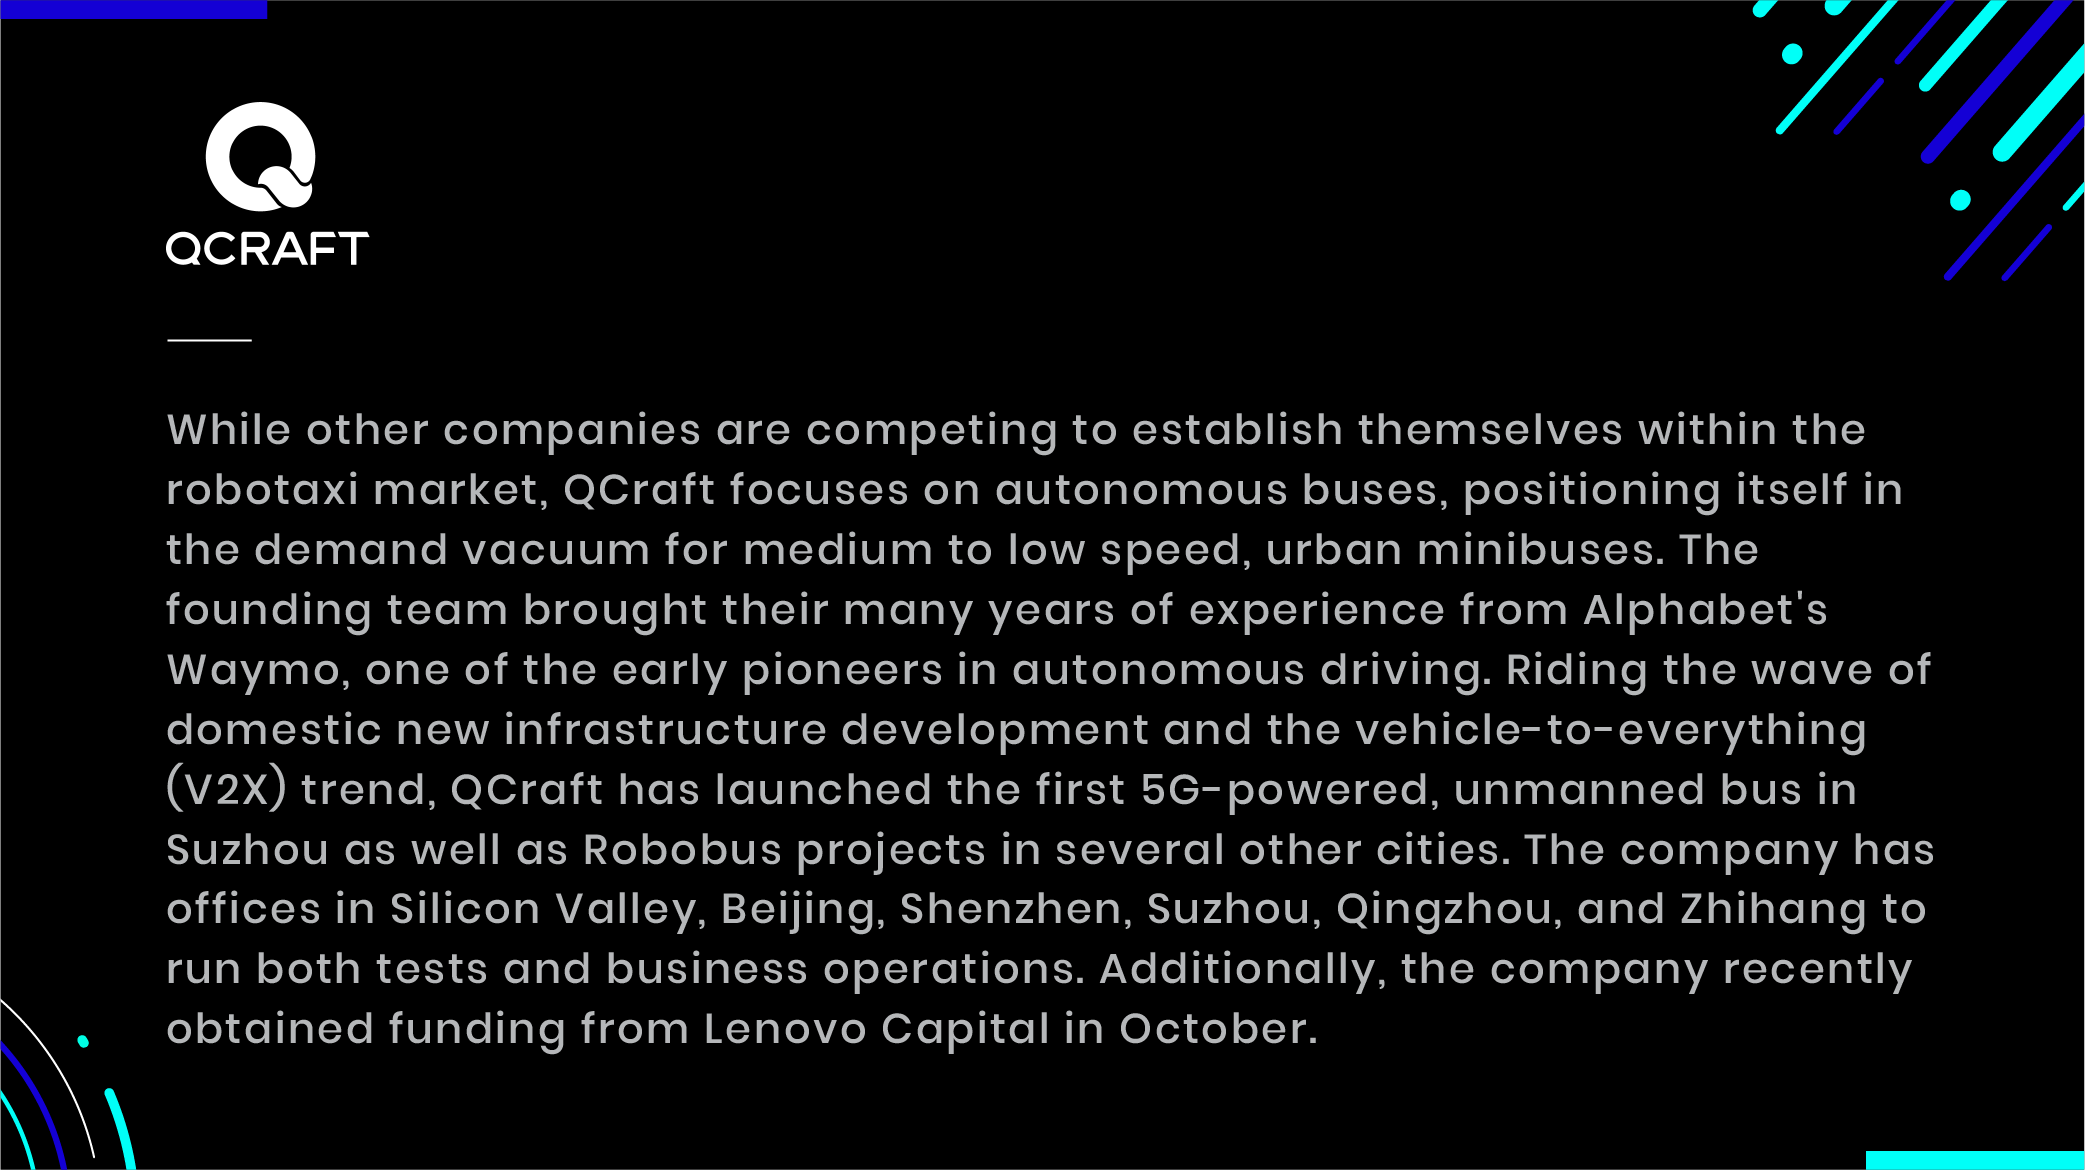 qcraft autonomous buses robobus low speed urban minibuses 5g unmanned bus suzhou silicon valley beijing lenovo capital funding